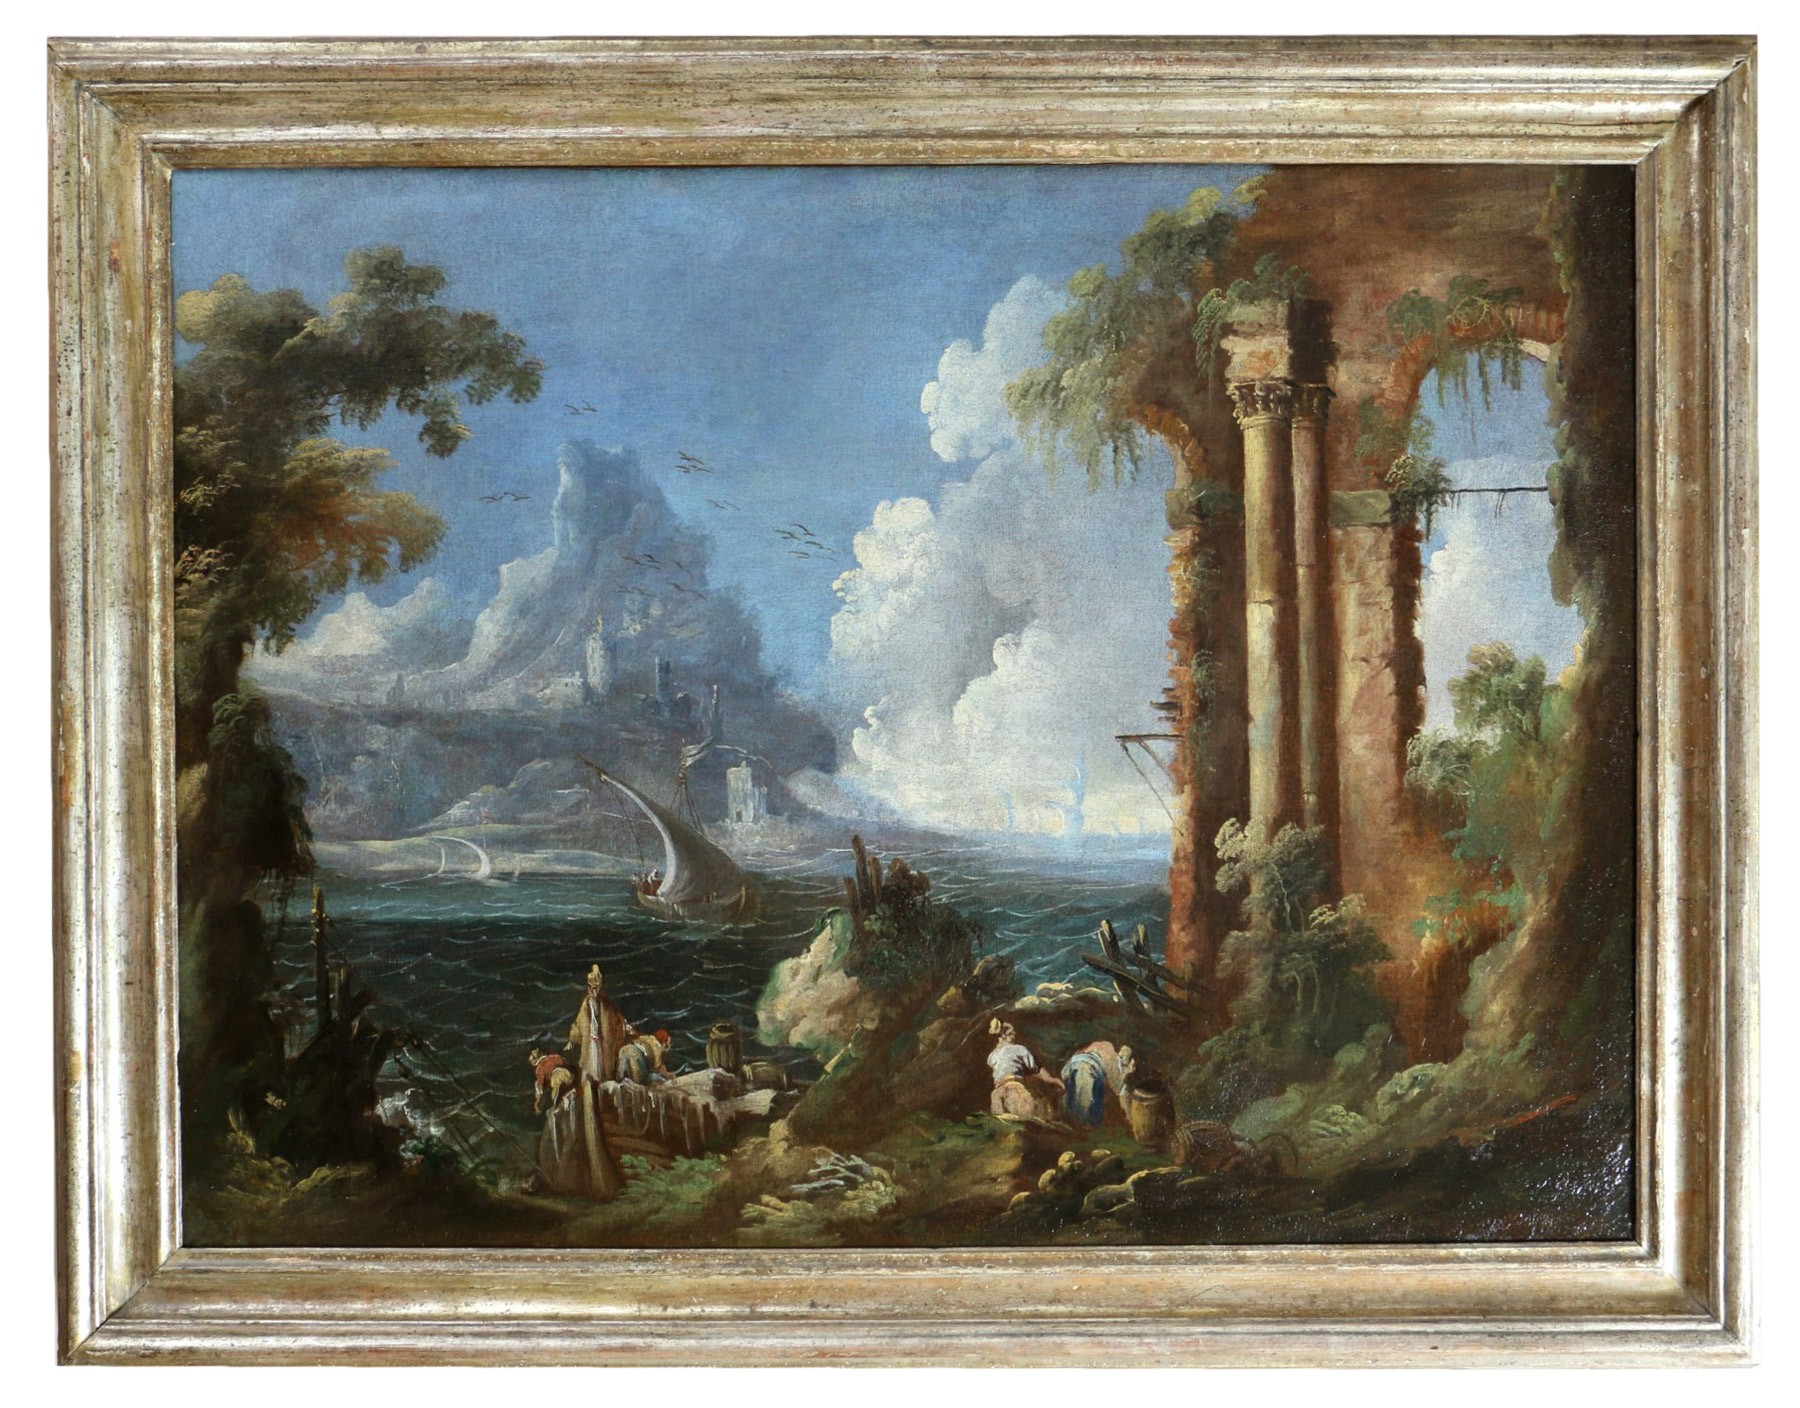 Marine in a landscape of around o (1680 ruins ancient -1750) - Coccorante Attributed 1700 Leonardo